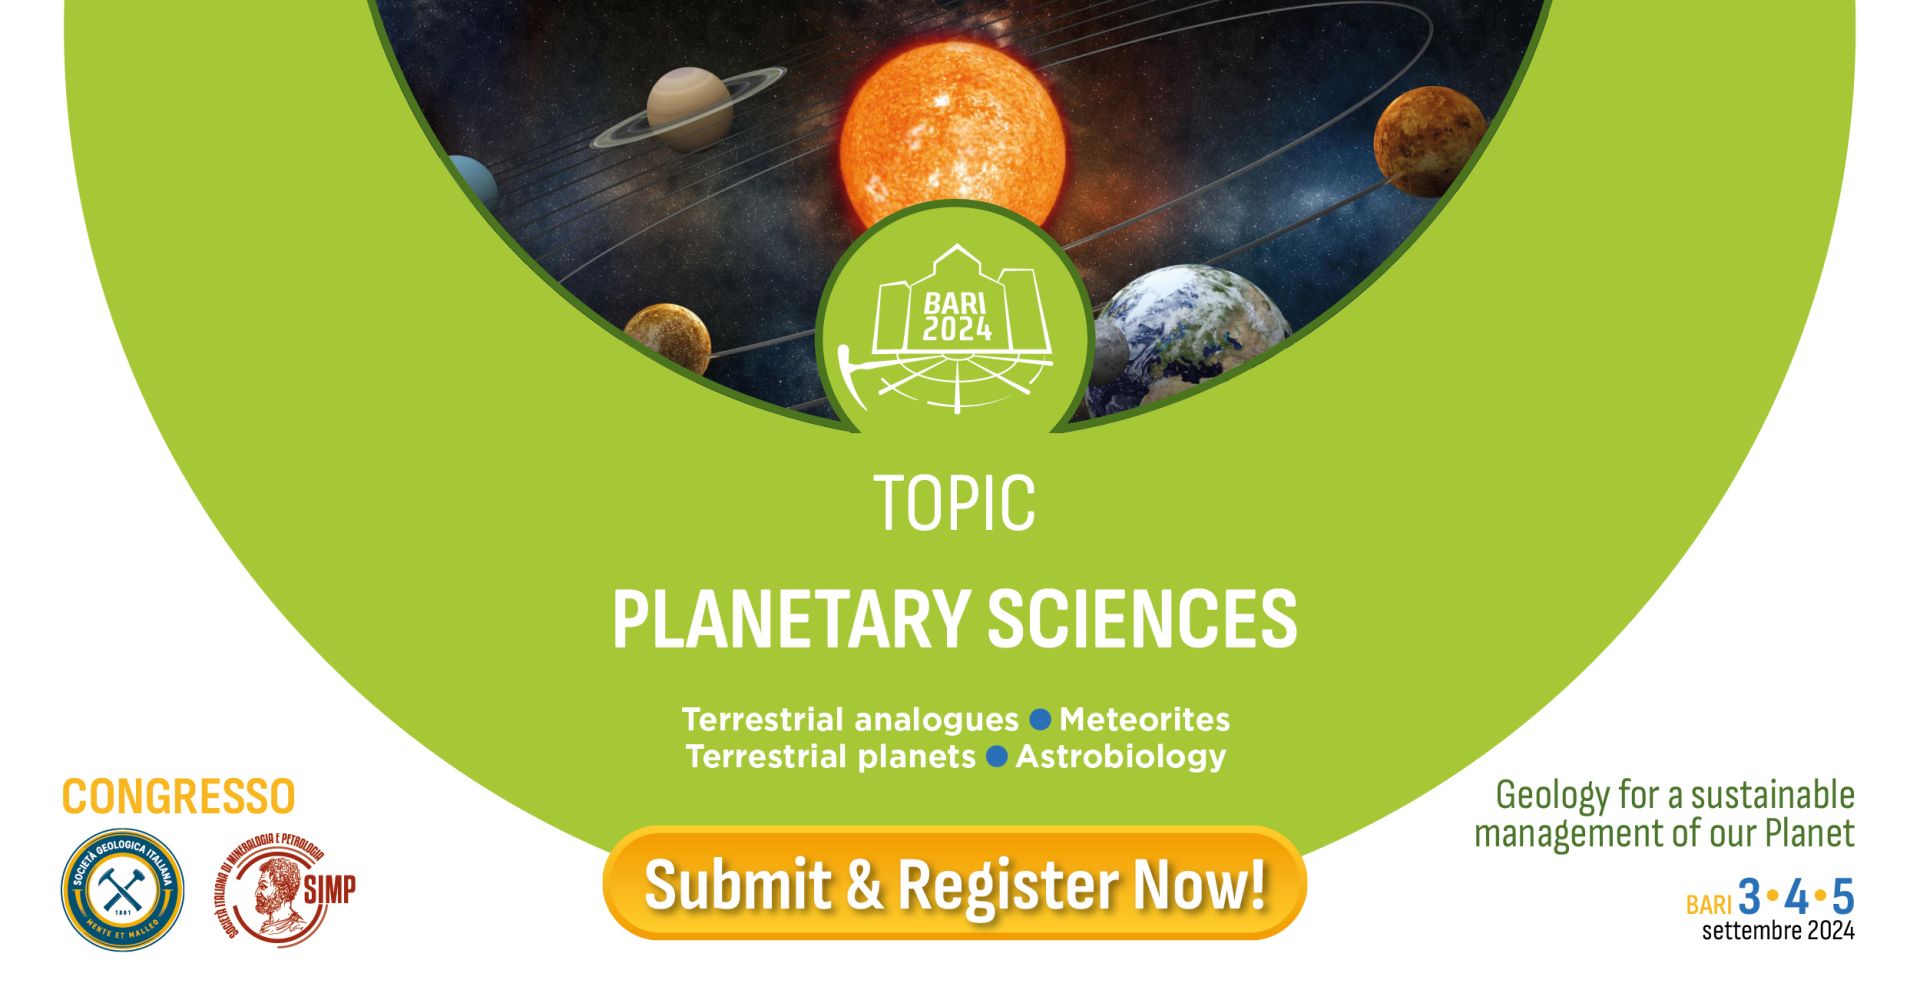 Planetary sciences